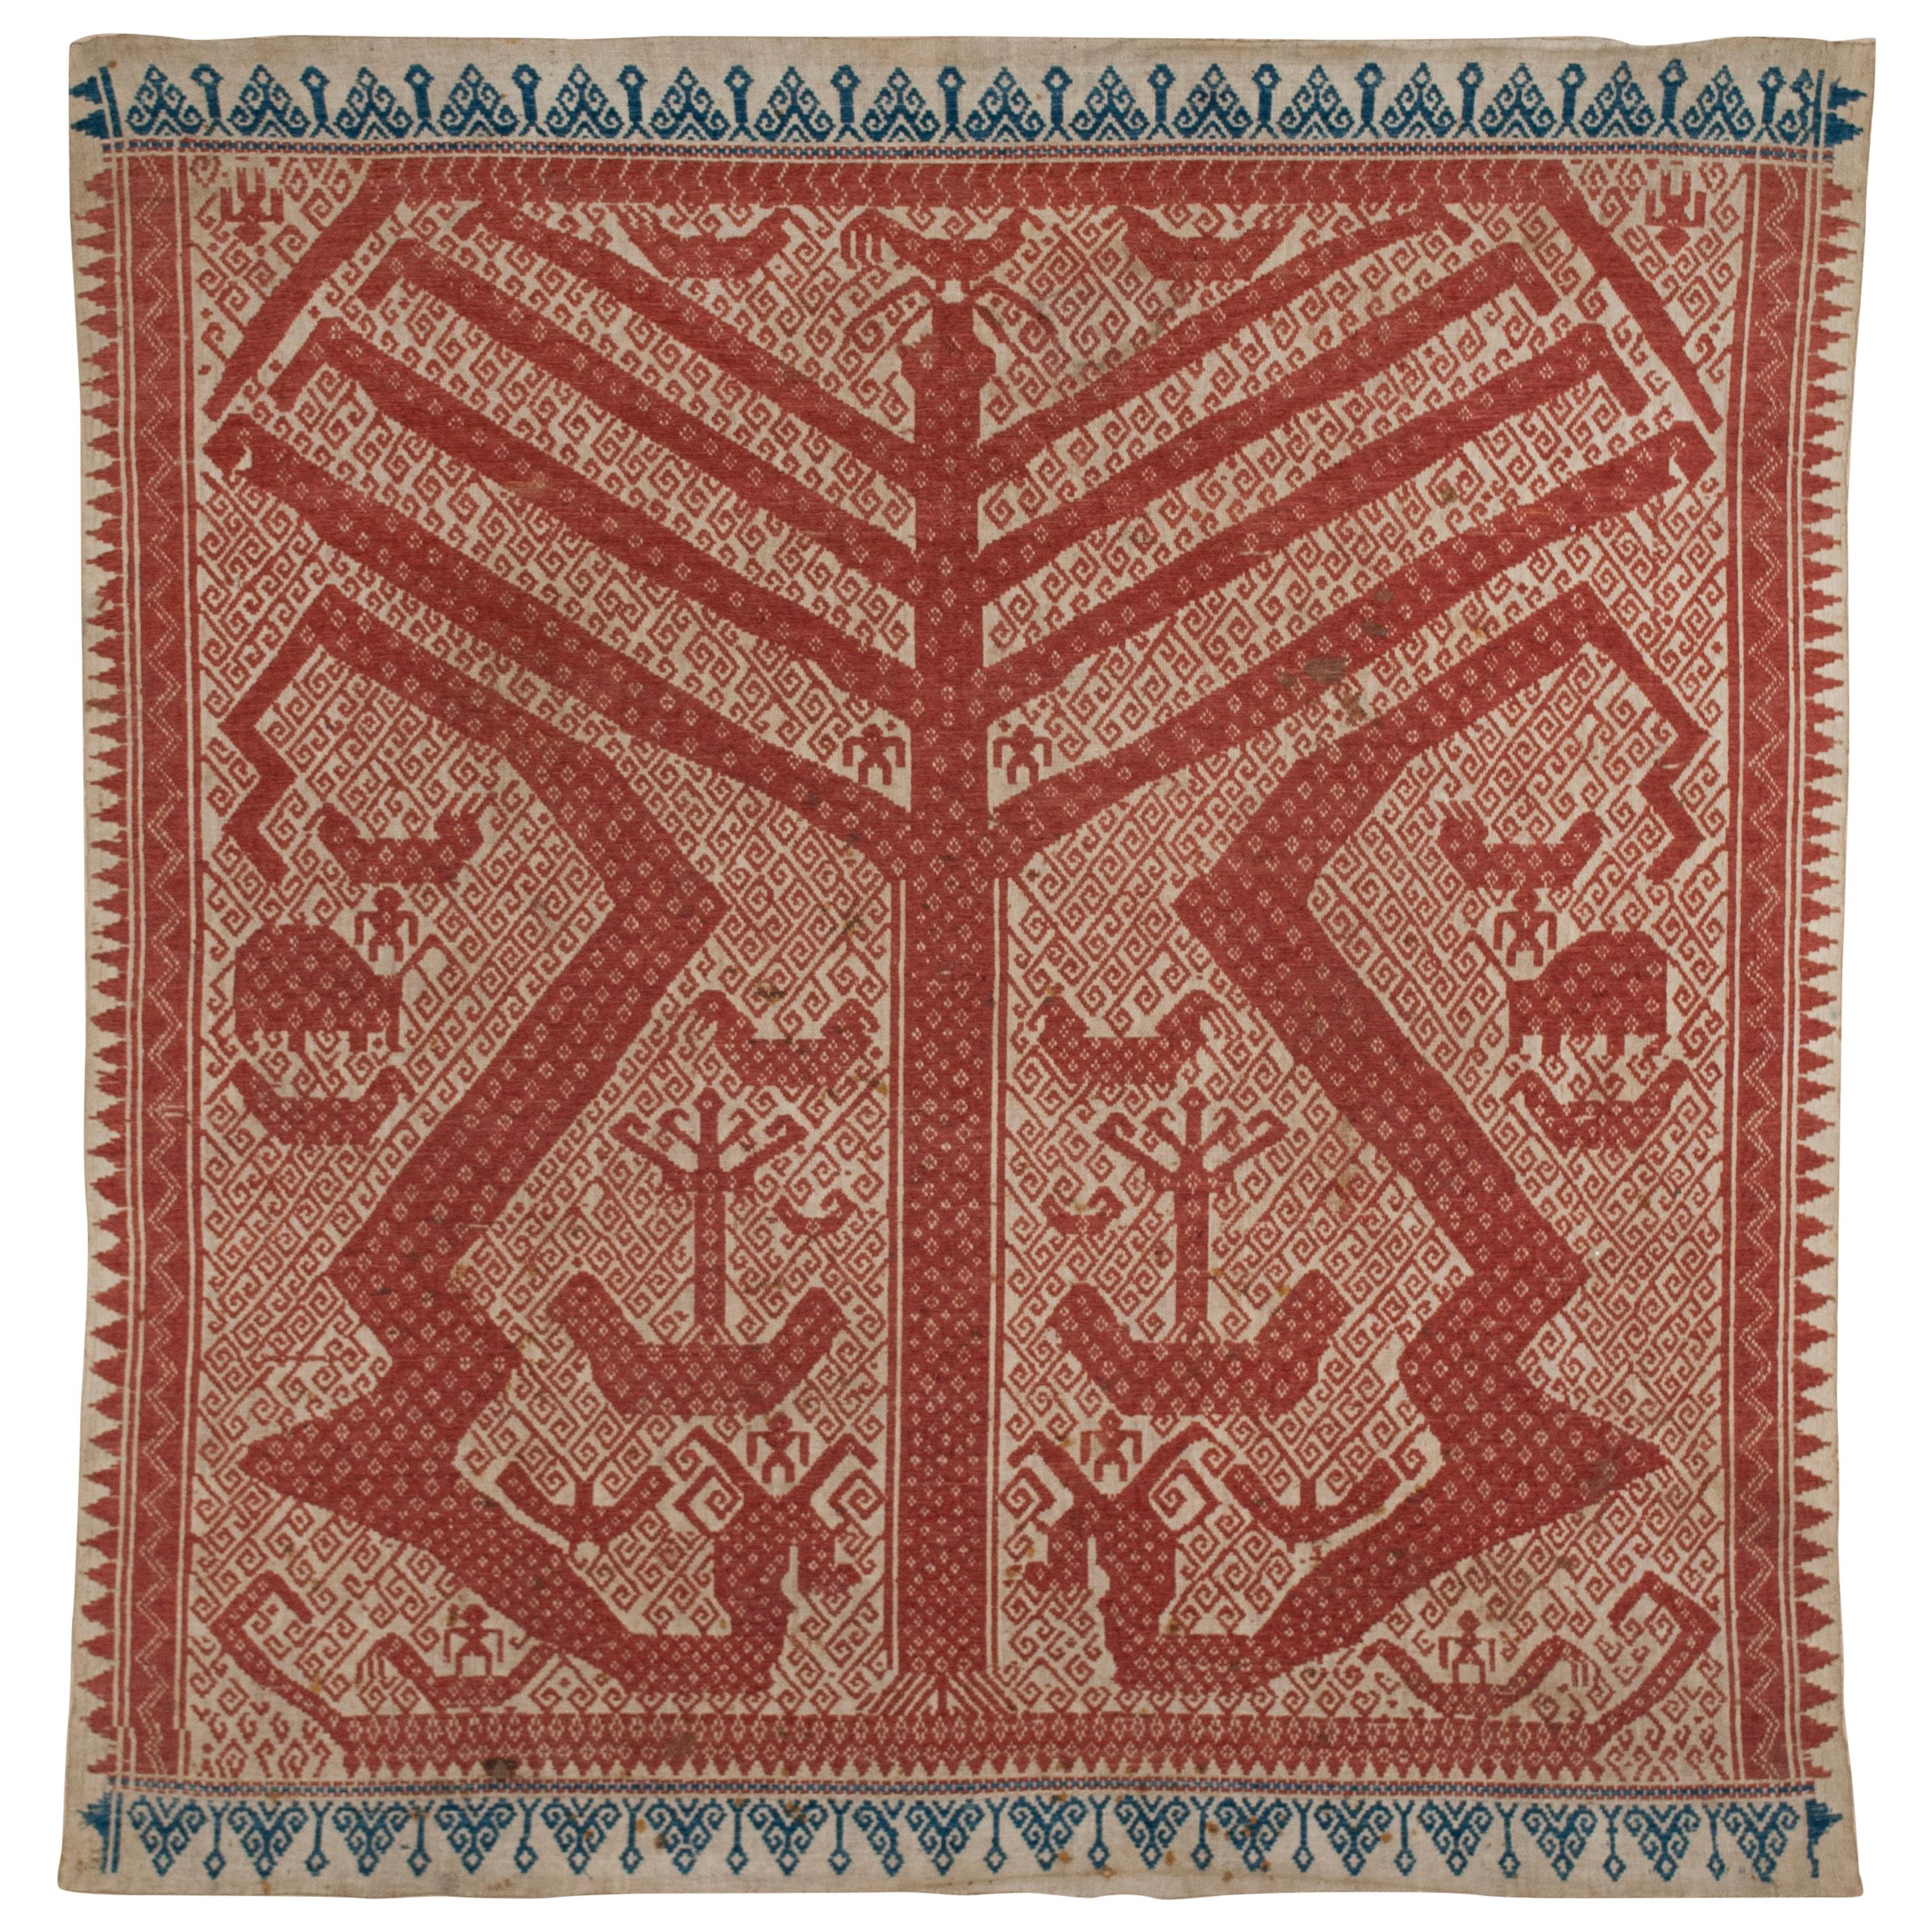 Early 20th Century Ceremonial Cloth / Tampan, South Sumatra, Indonesia